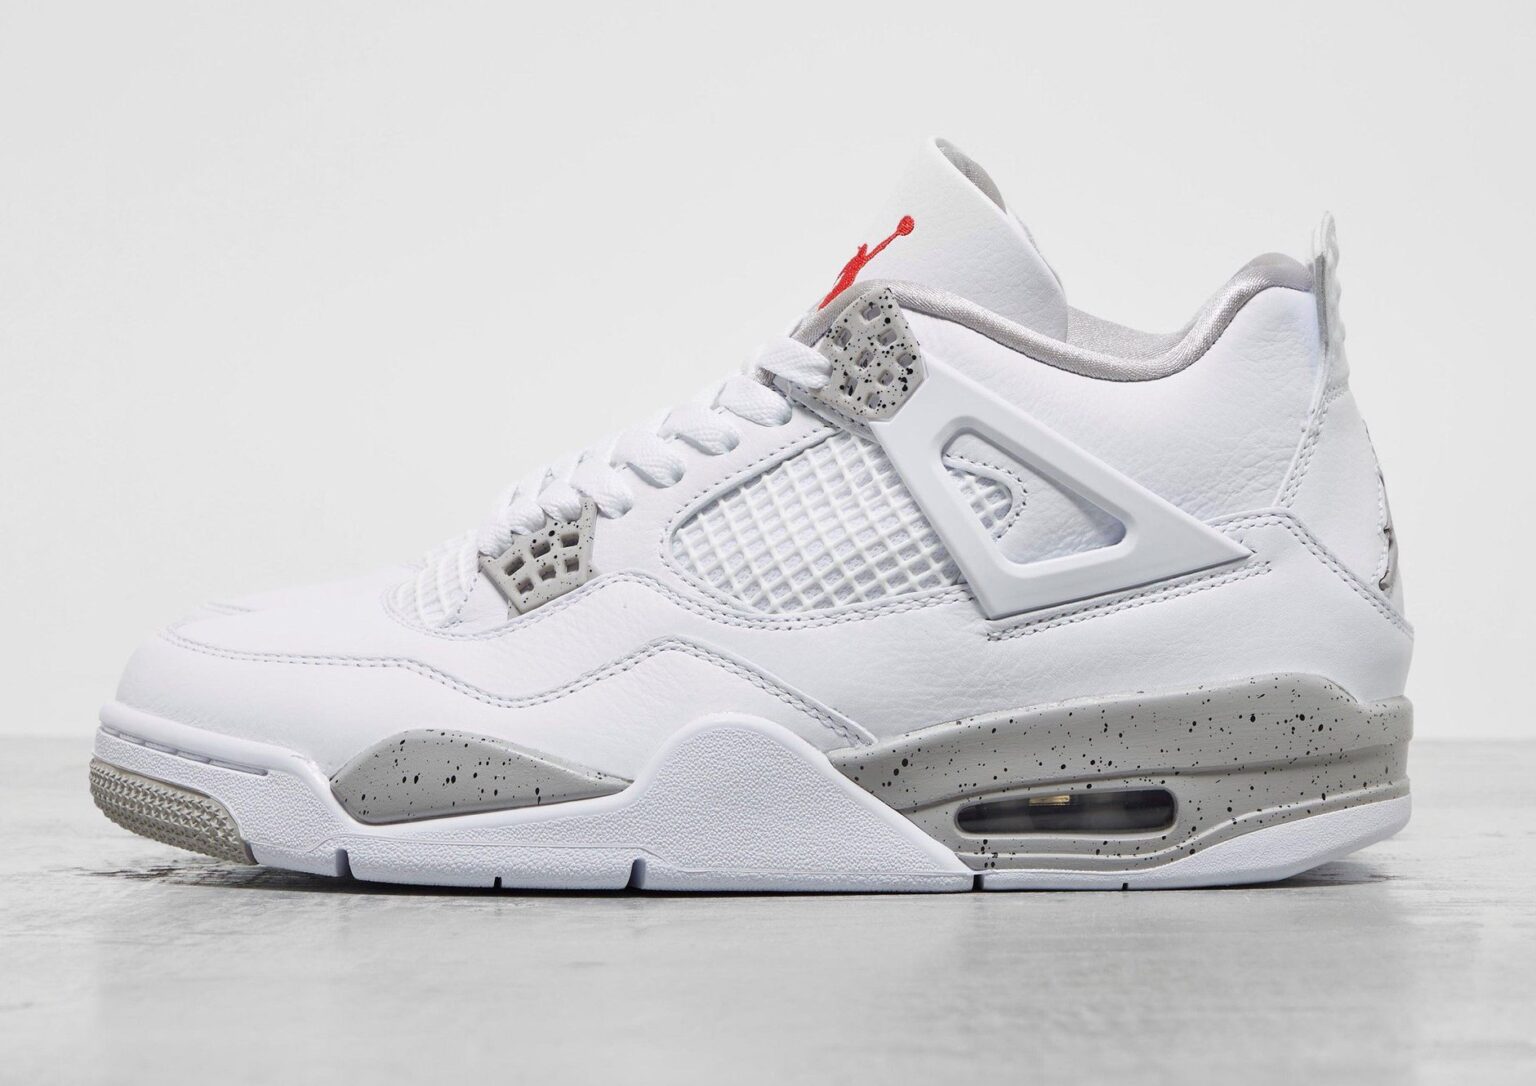 Air Jordan 4 Retro "White Oreo" Releasing Next Month Sneaker Buzz